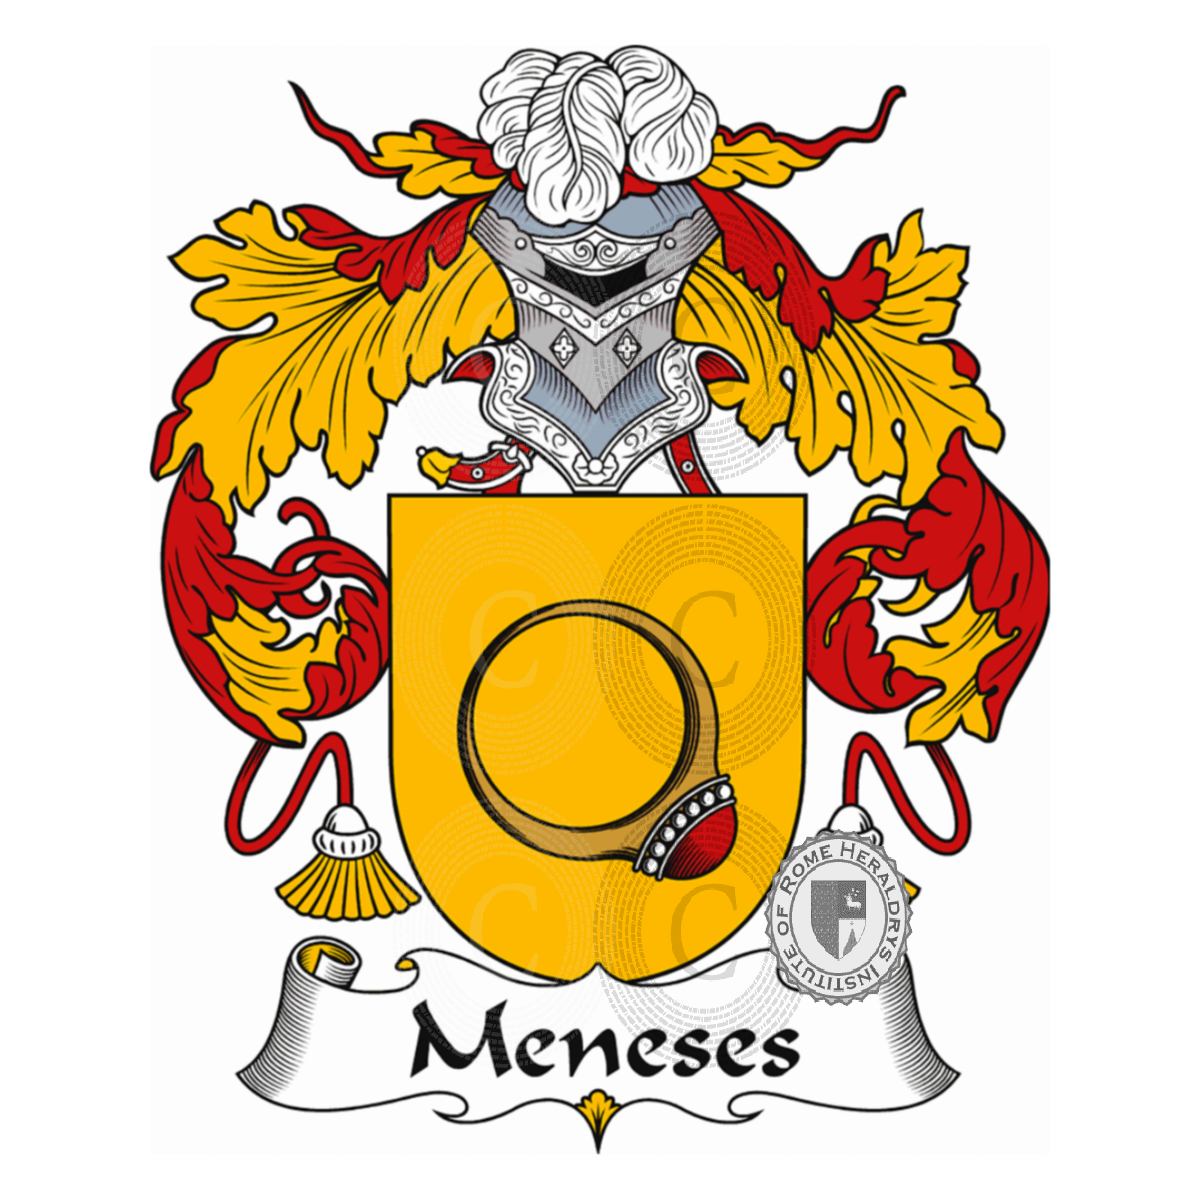 Wappen der FamilieMeneses